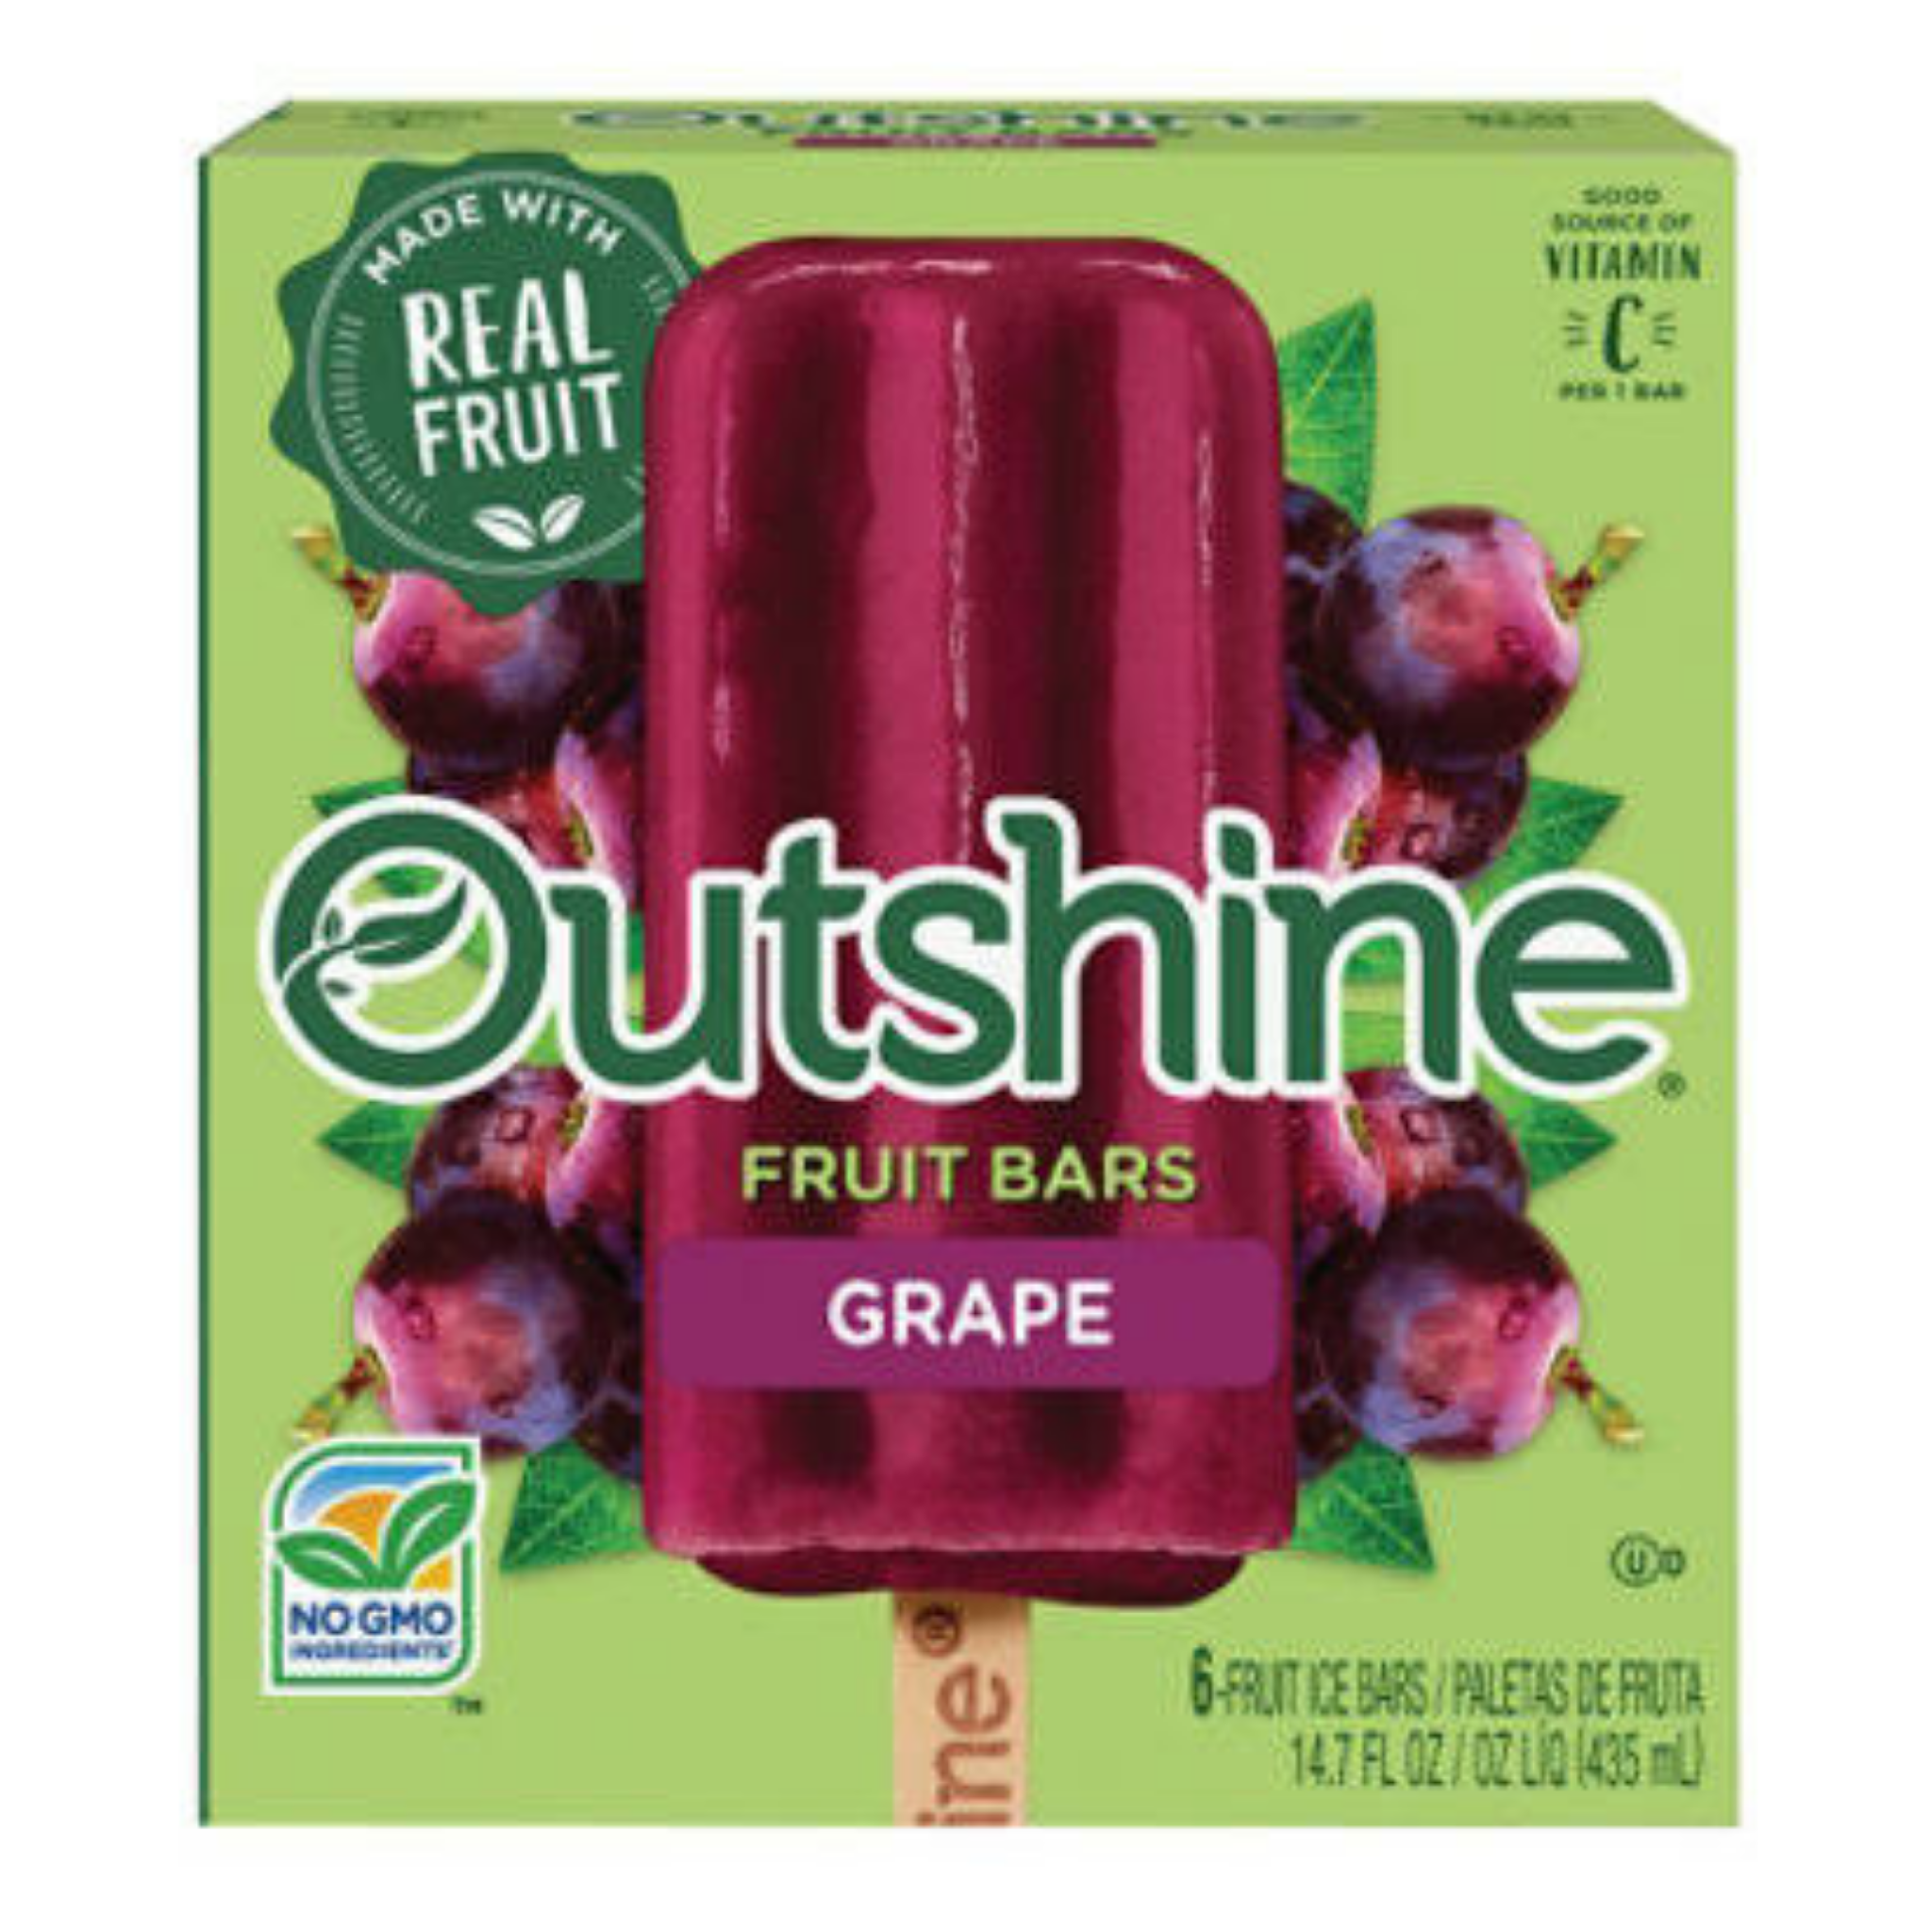 Outshine Fruit Bar Grape